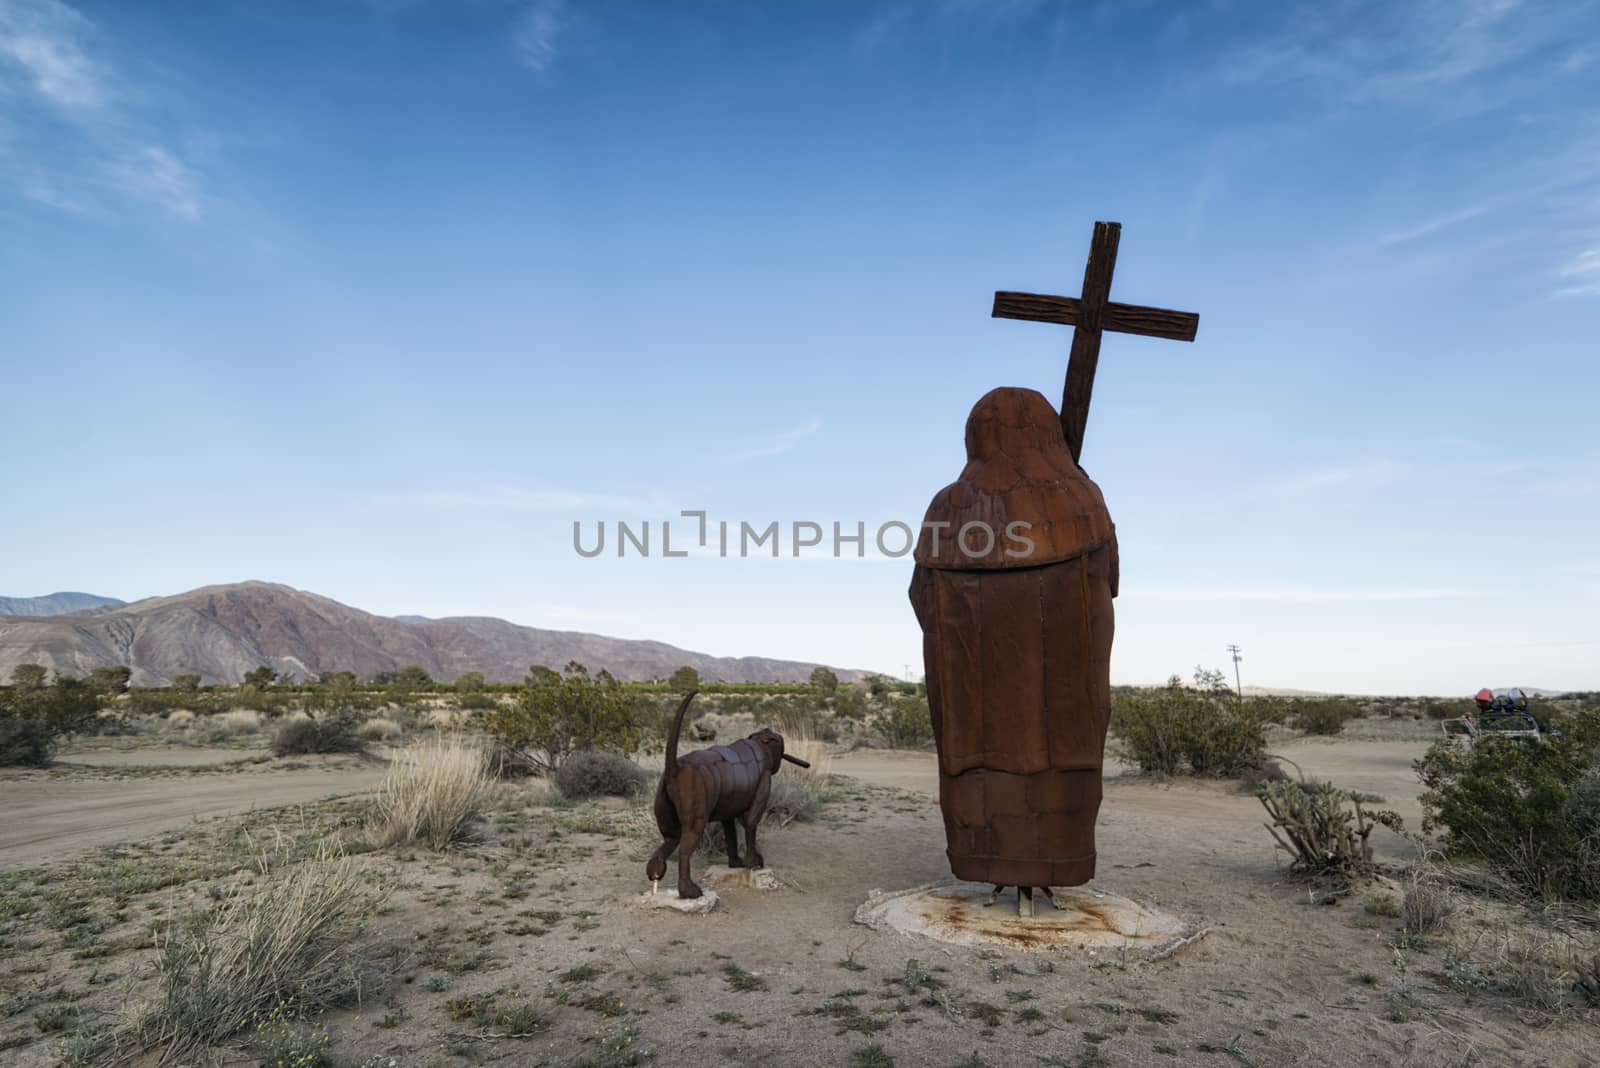 Artistic Metal Sculpture in the Desert, California